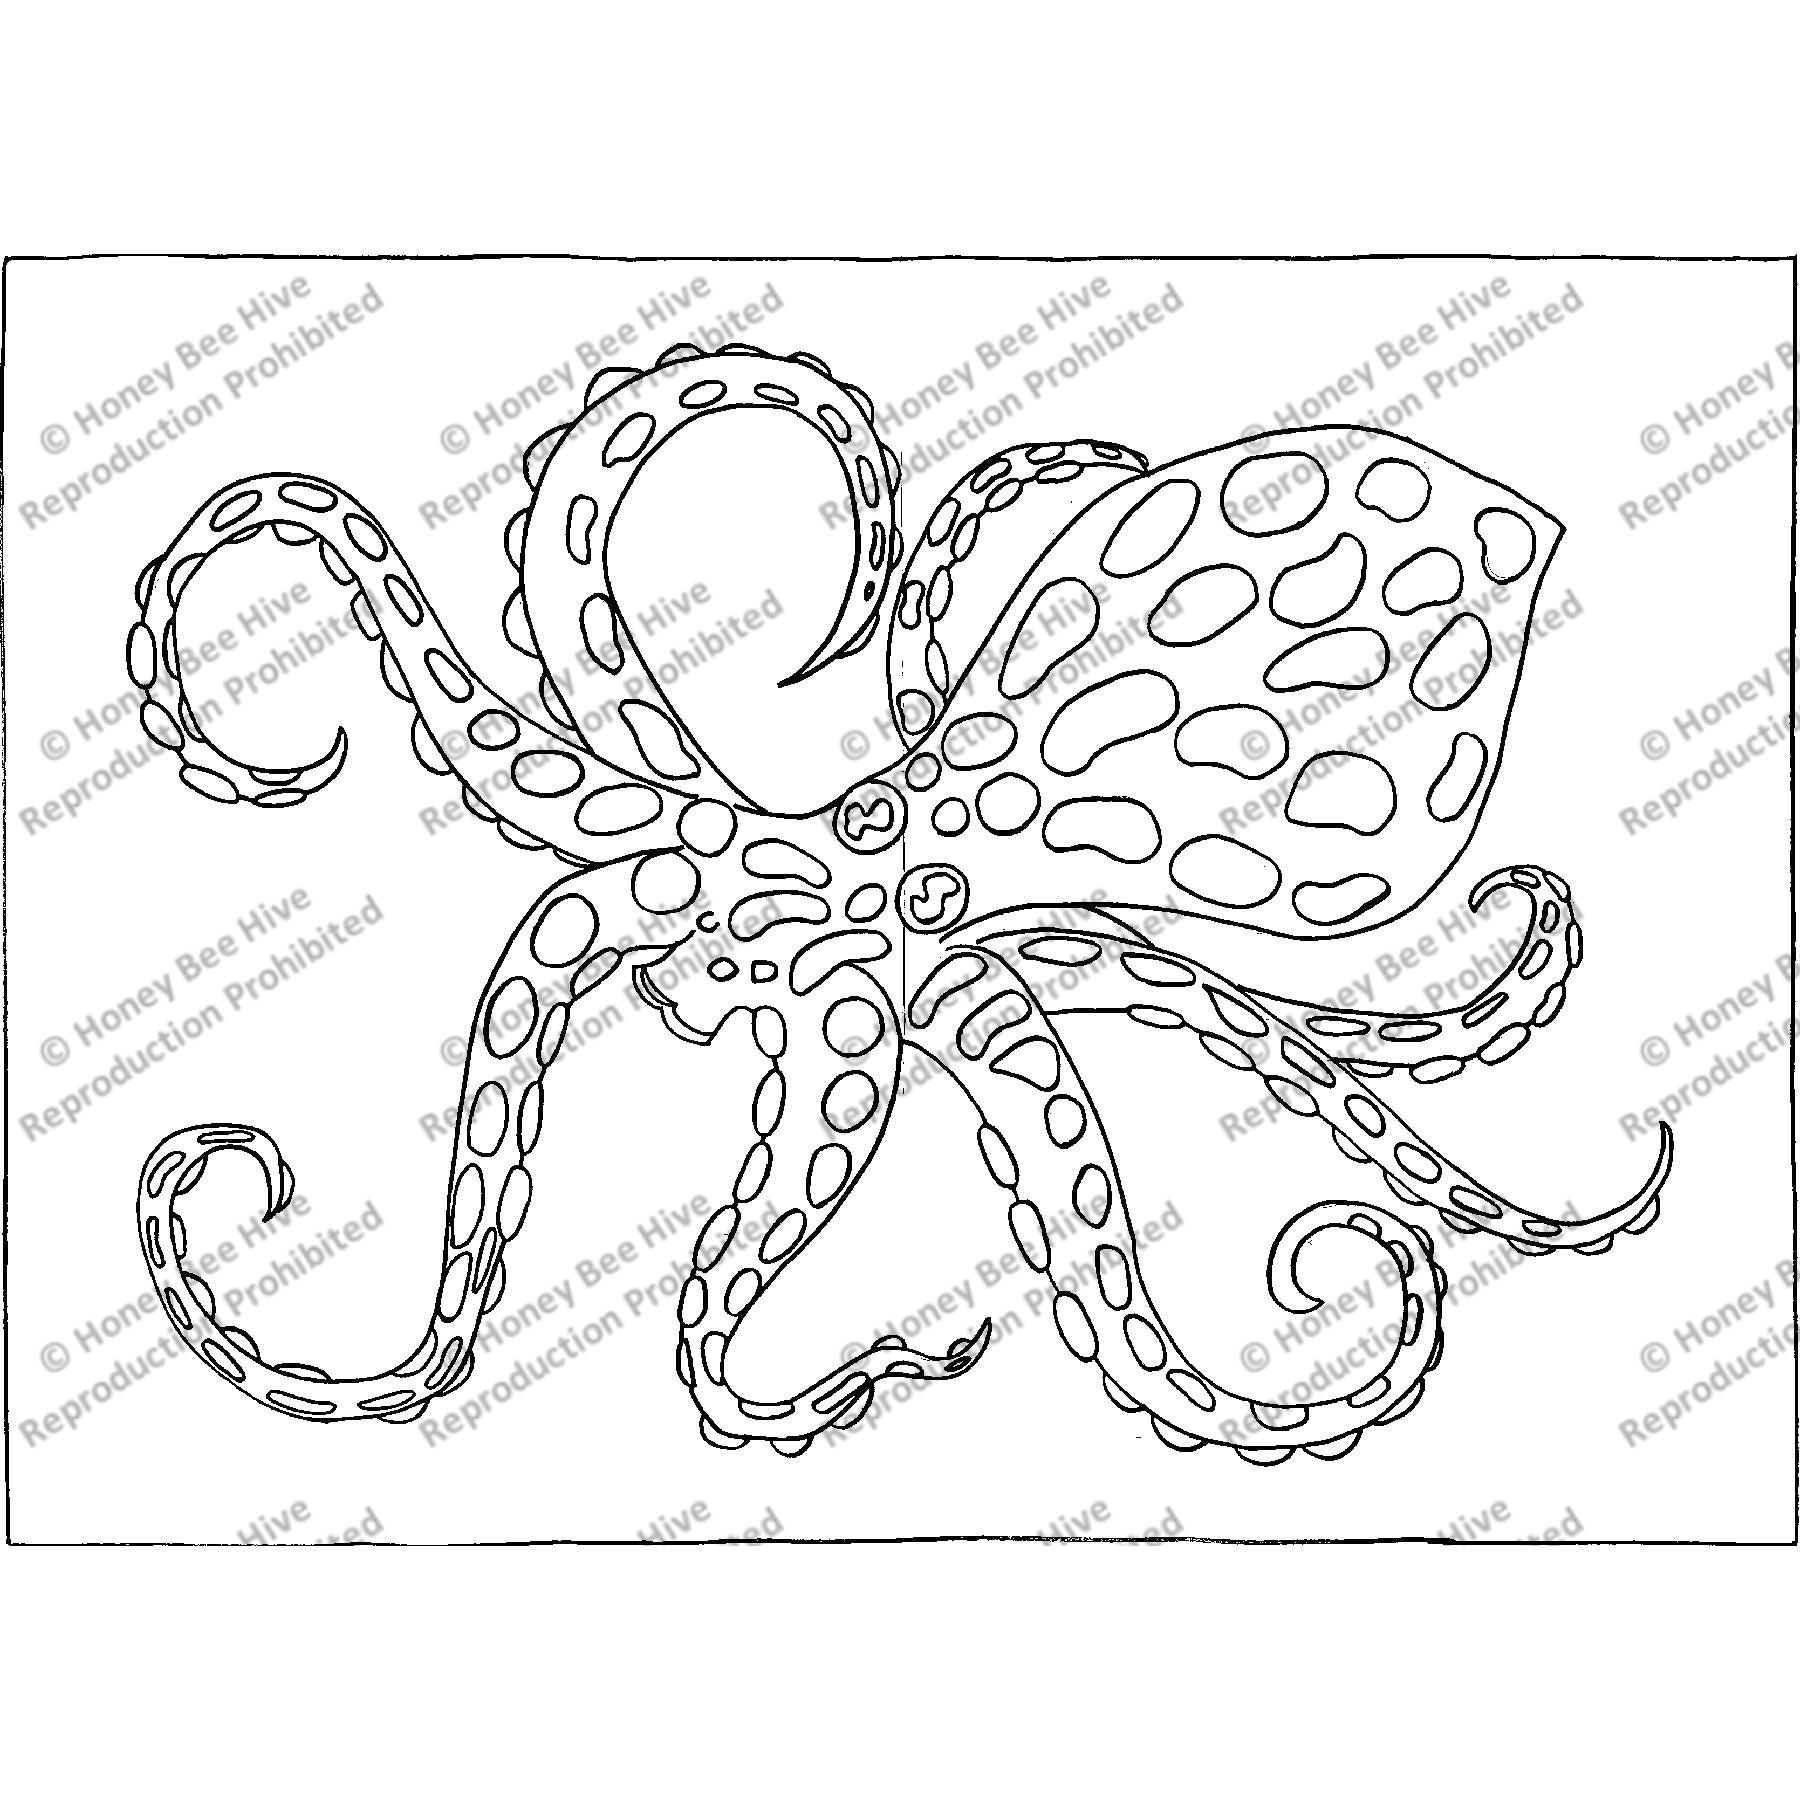 Octavius, rug hooking pattern